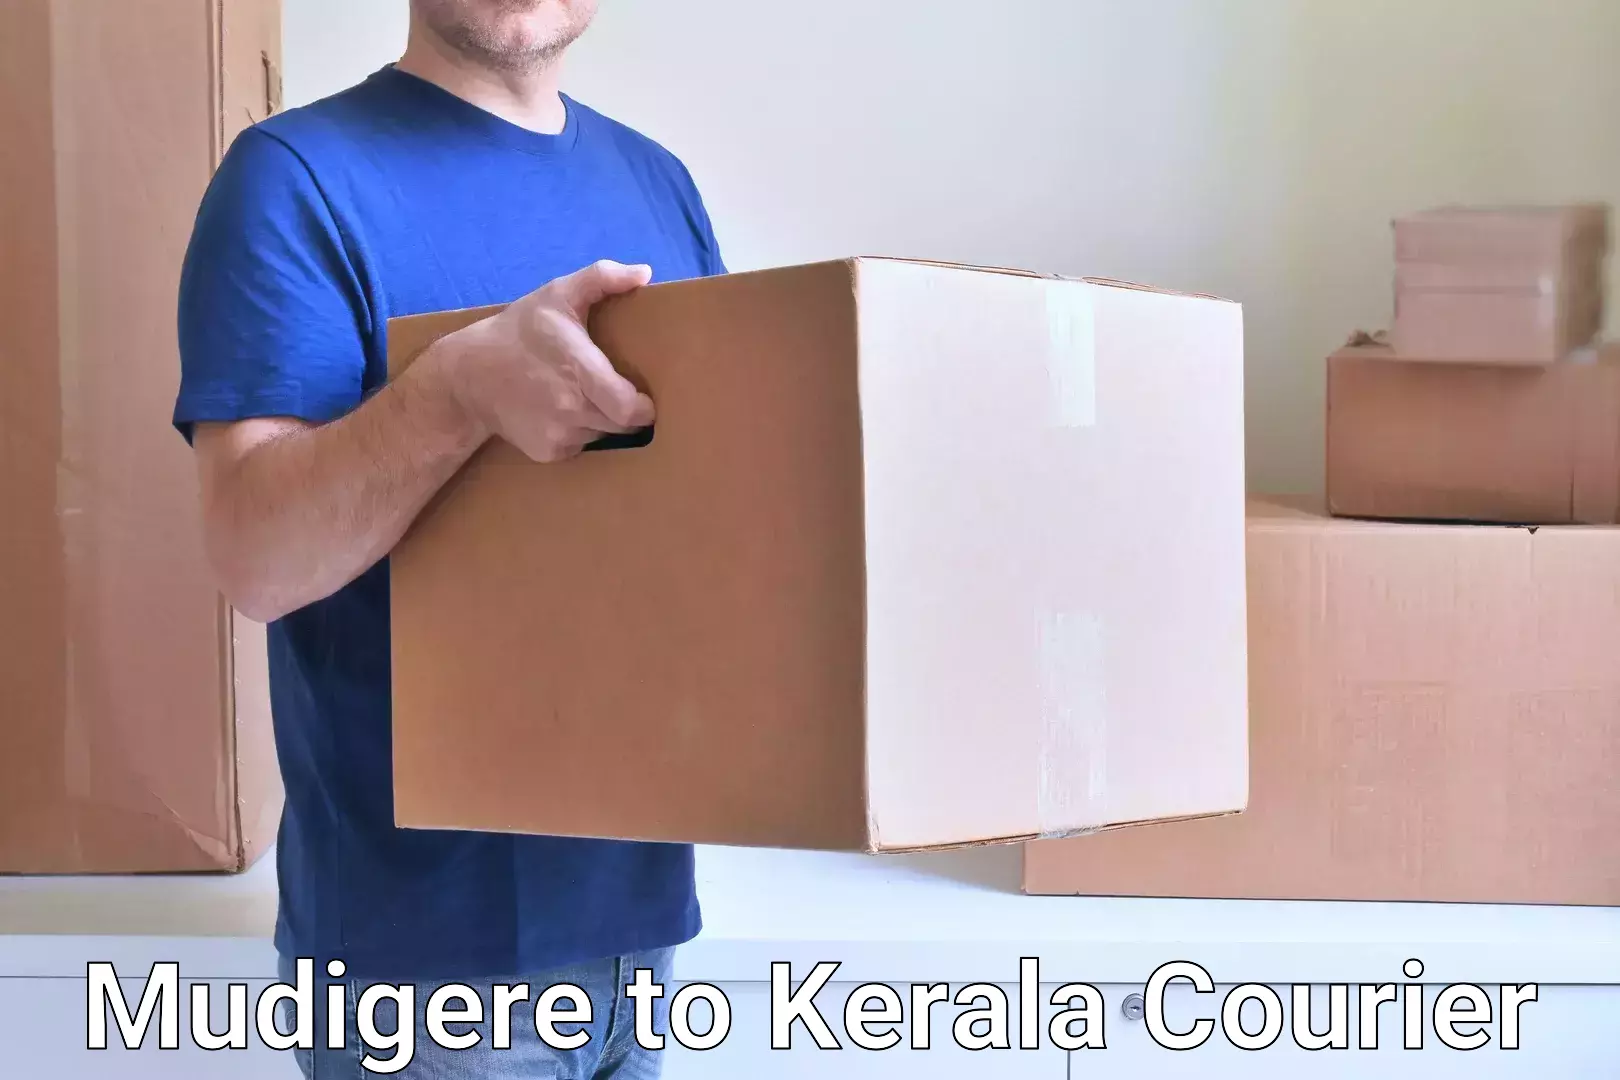 Courier service innovation Mudigere to Cochin Port Kochi